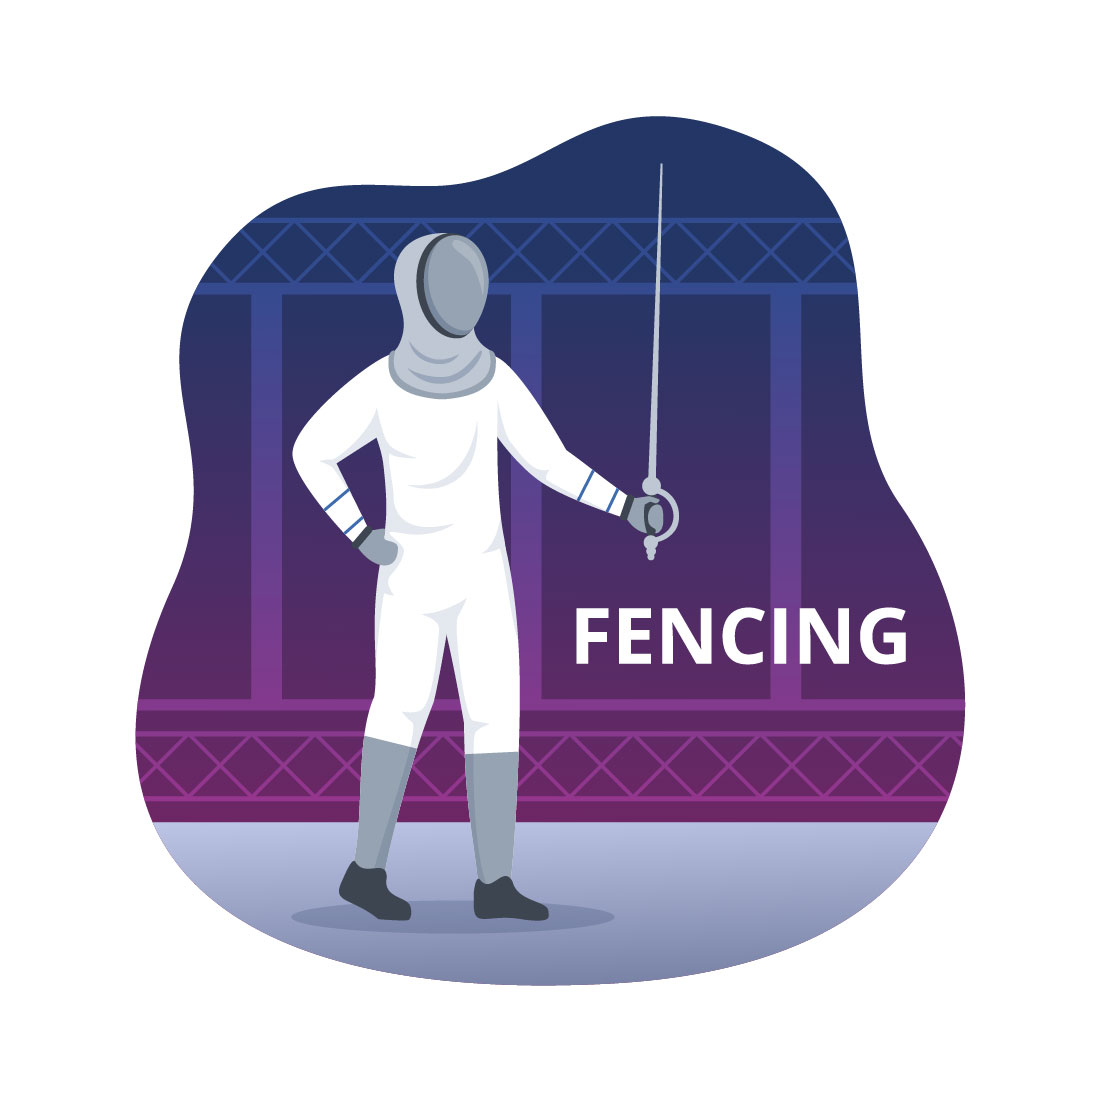 10 Fencing Player Sport Illustration cover image.